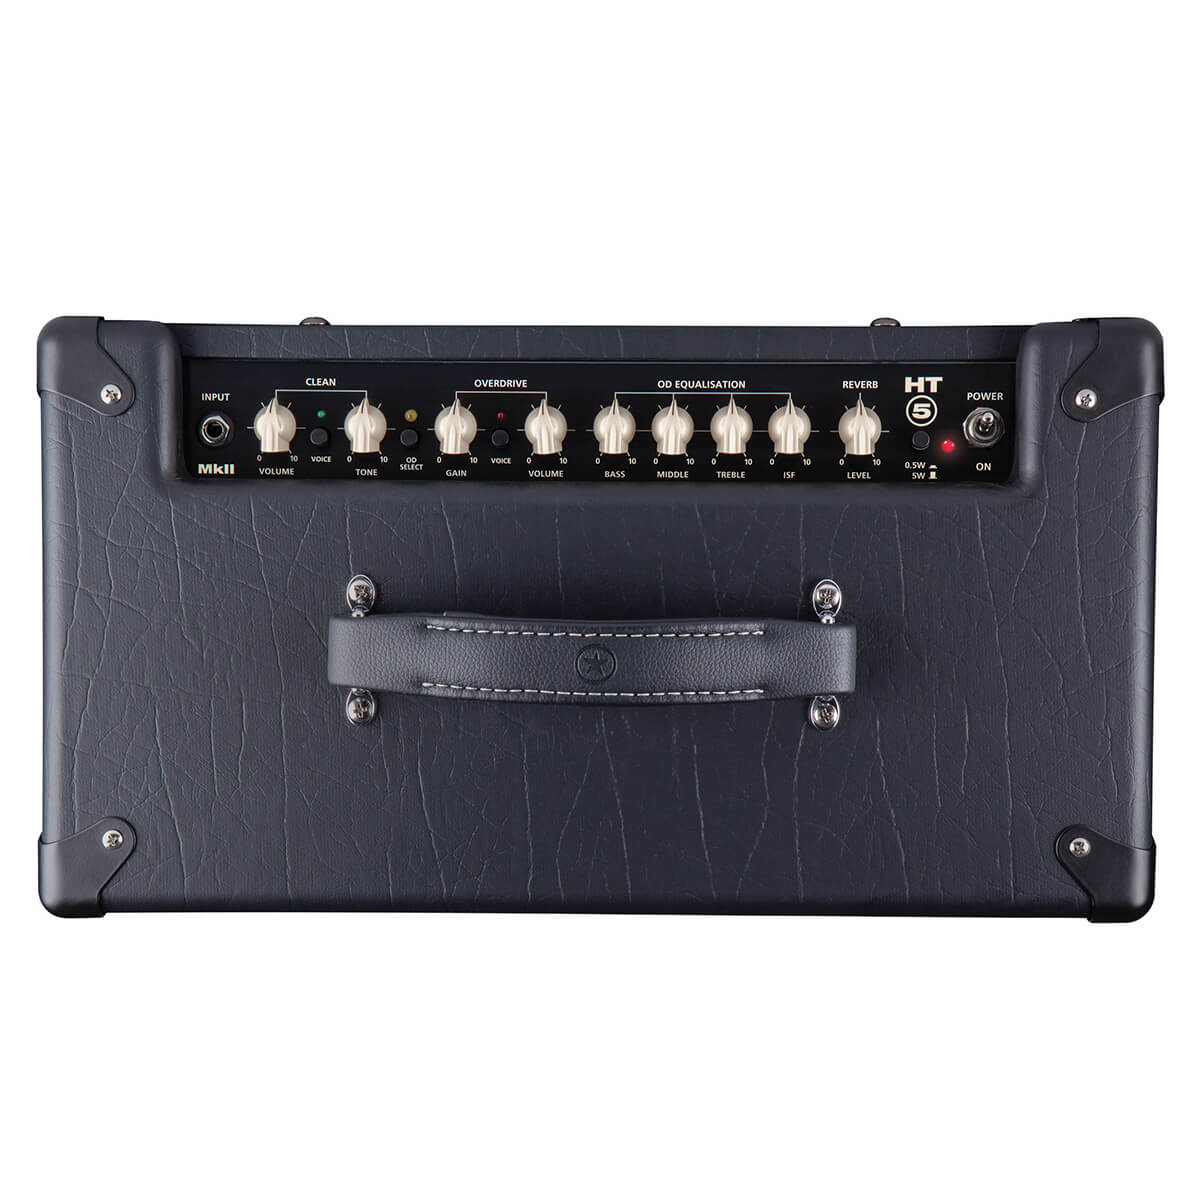 Blackstar HT-5R MKII Valve Combo Guitar Amplifier